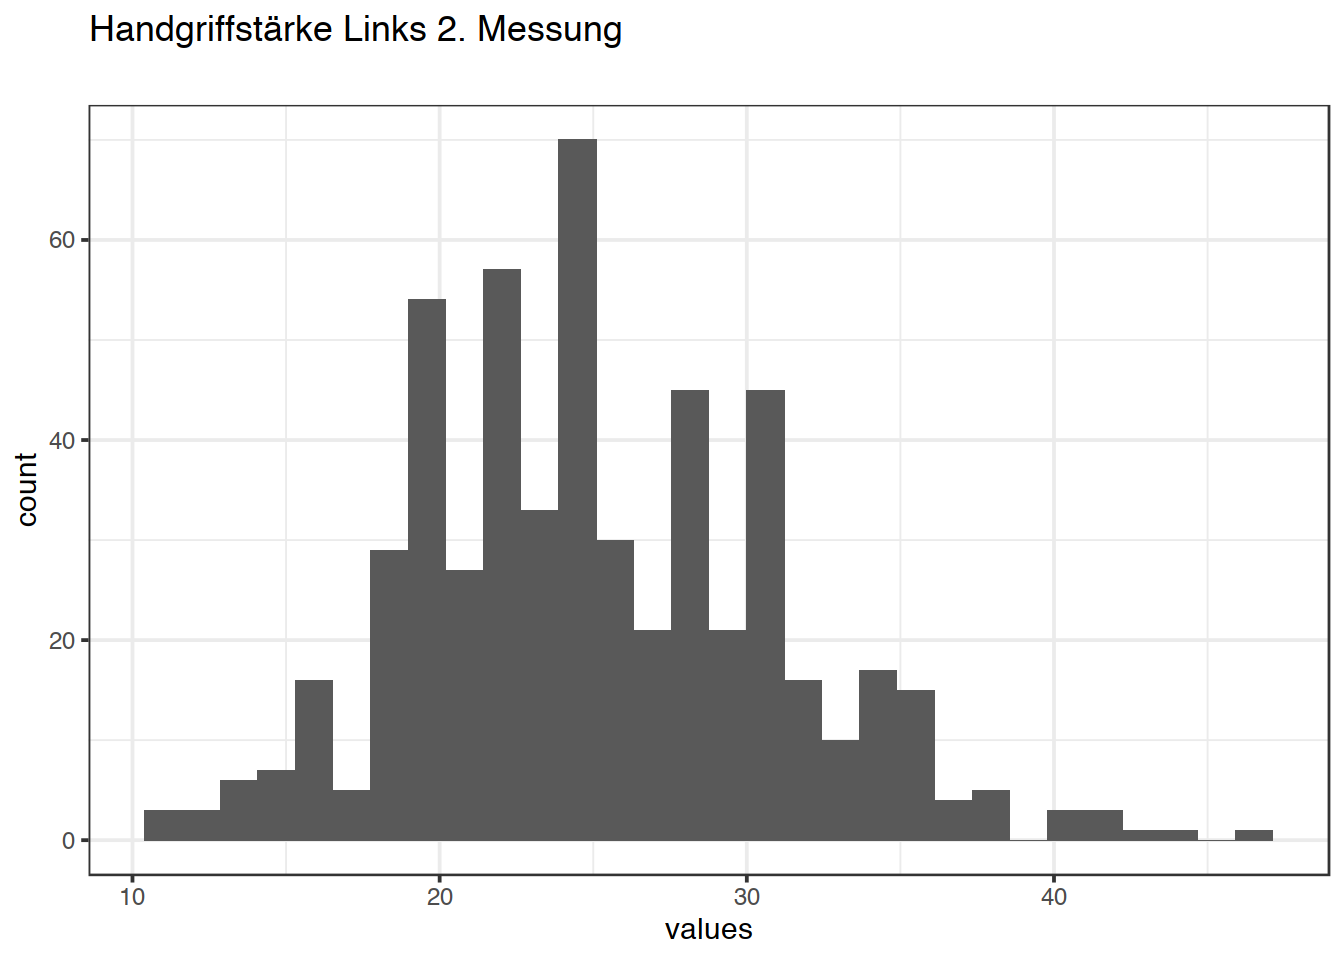 Distribution of values for Handgriffstärke Links 2. Messung